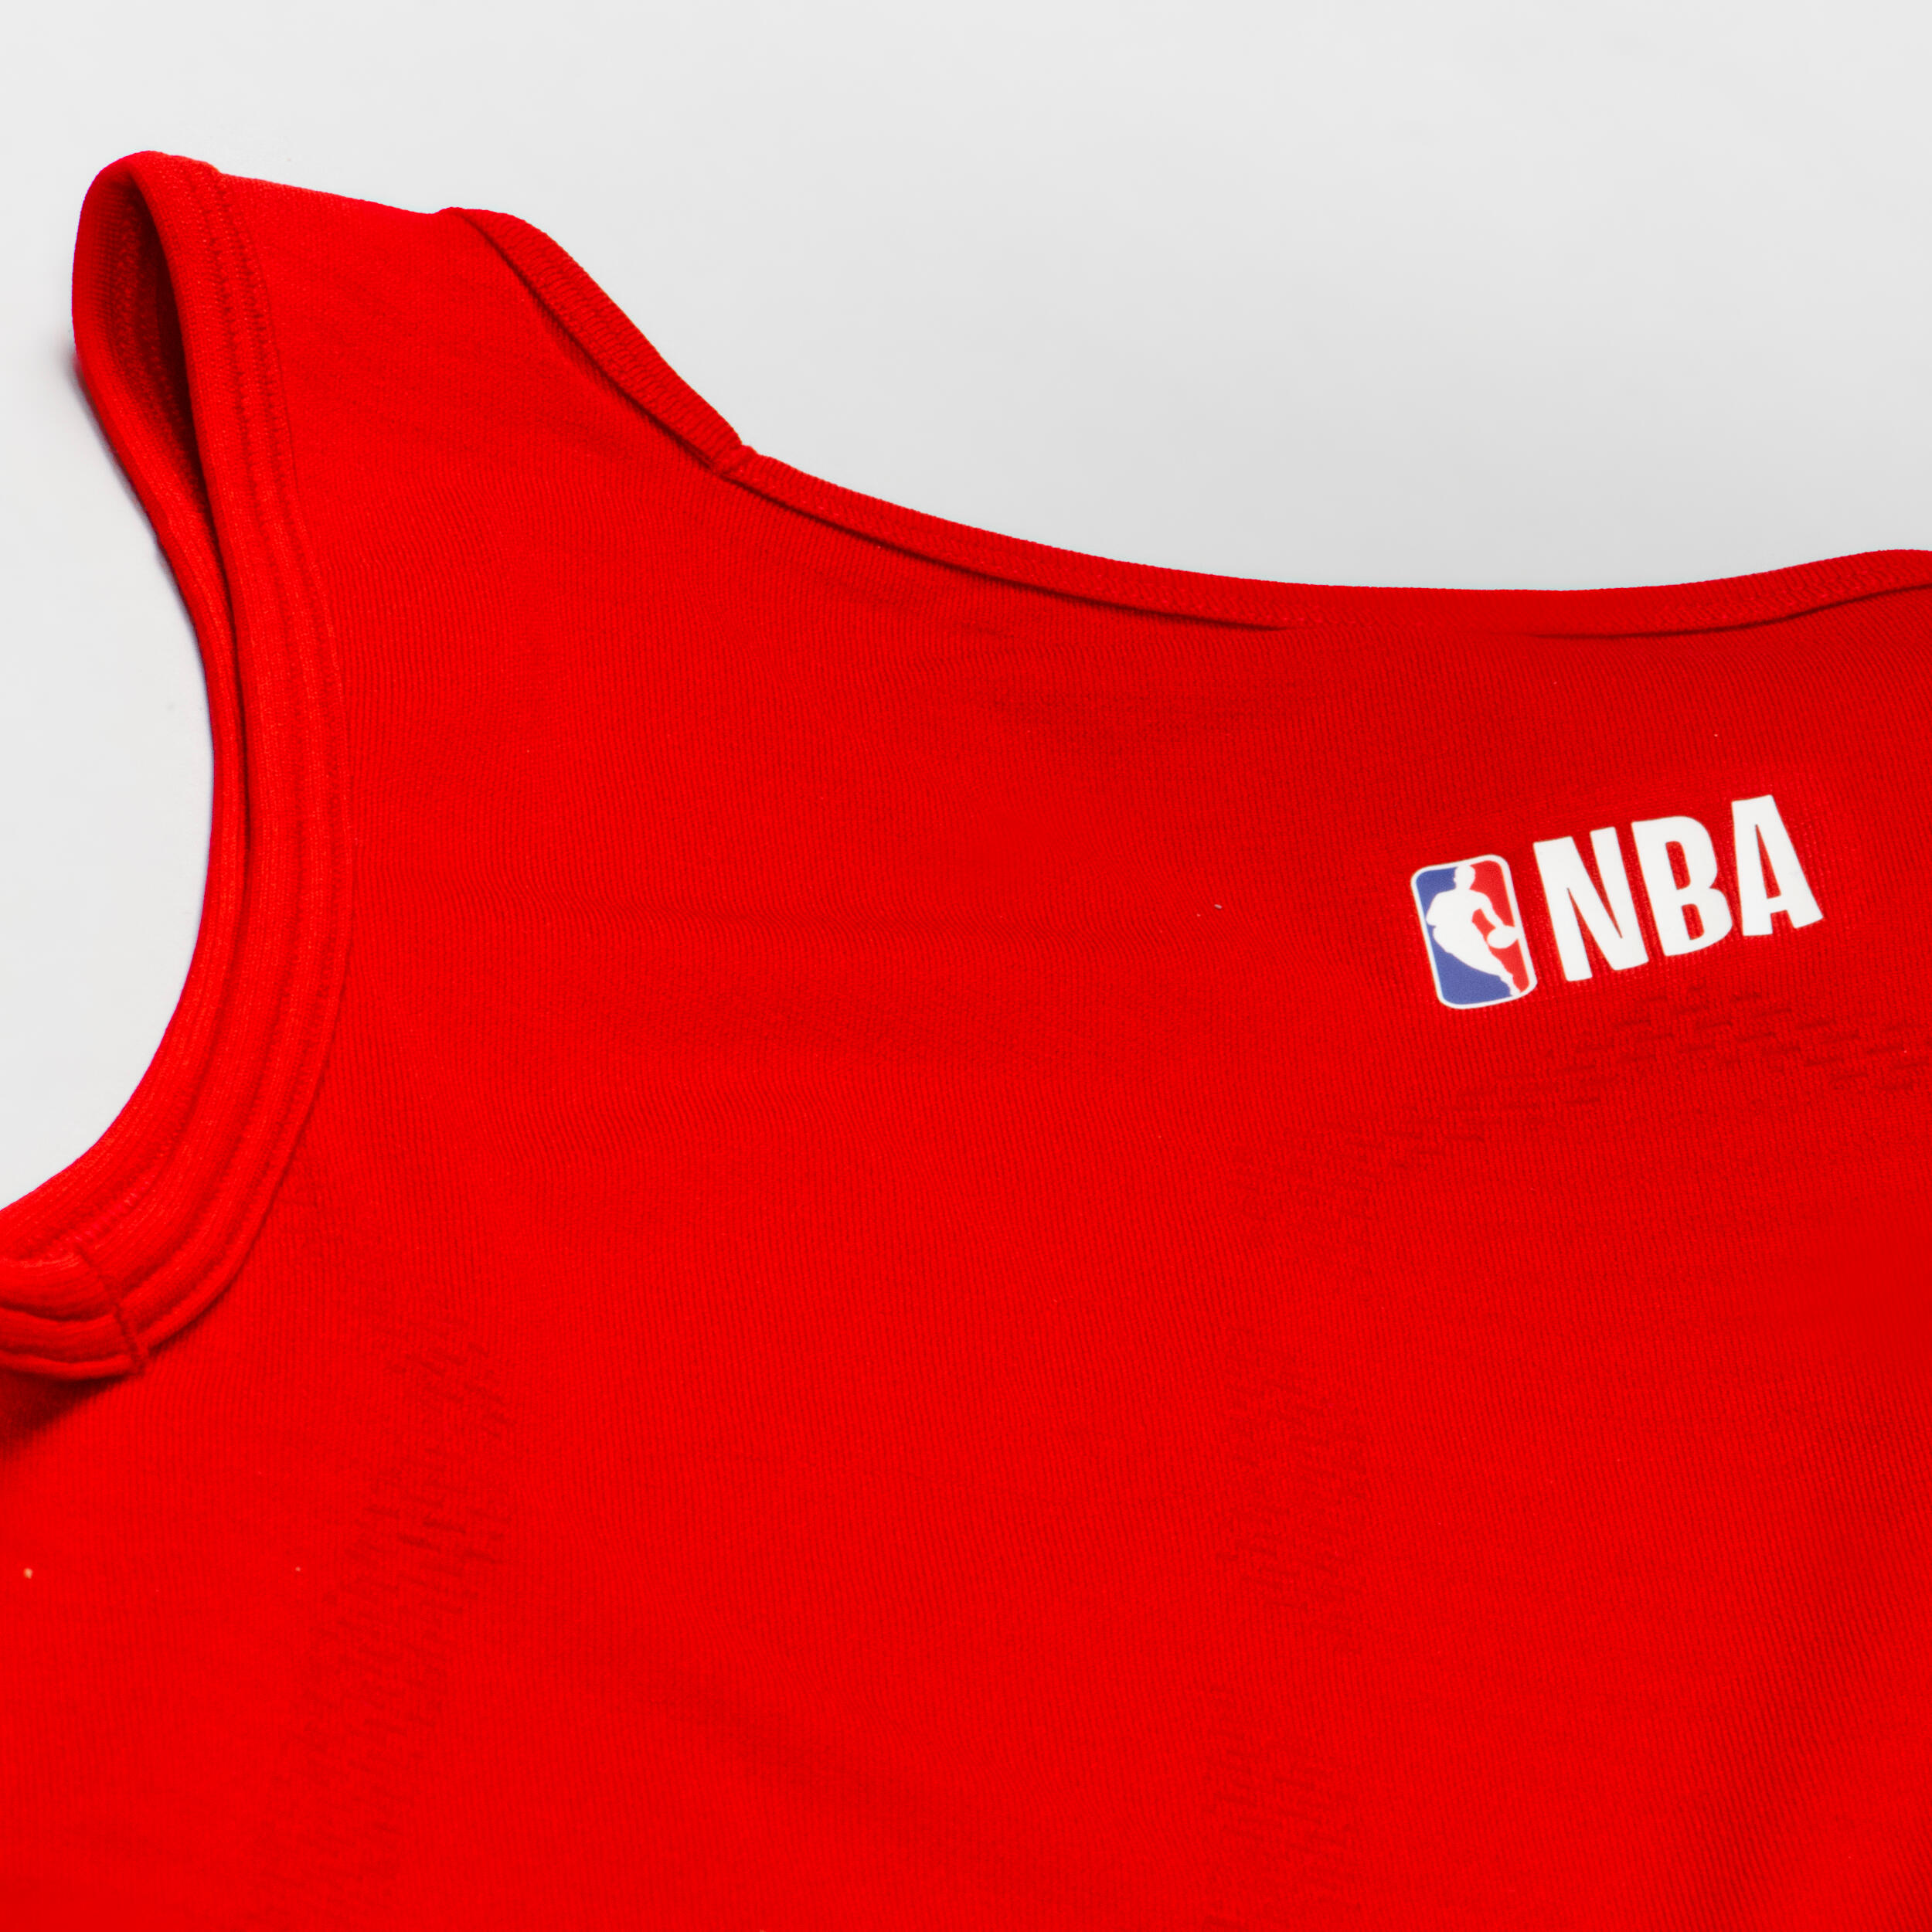 NBA Men's Tank Top - Red - M